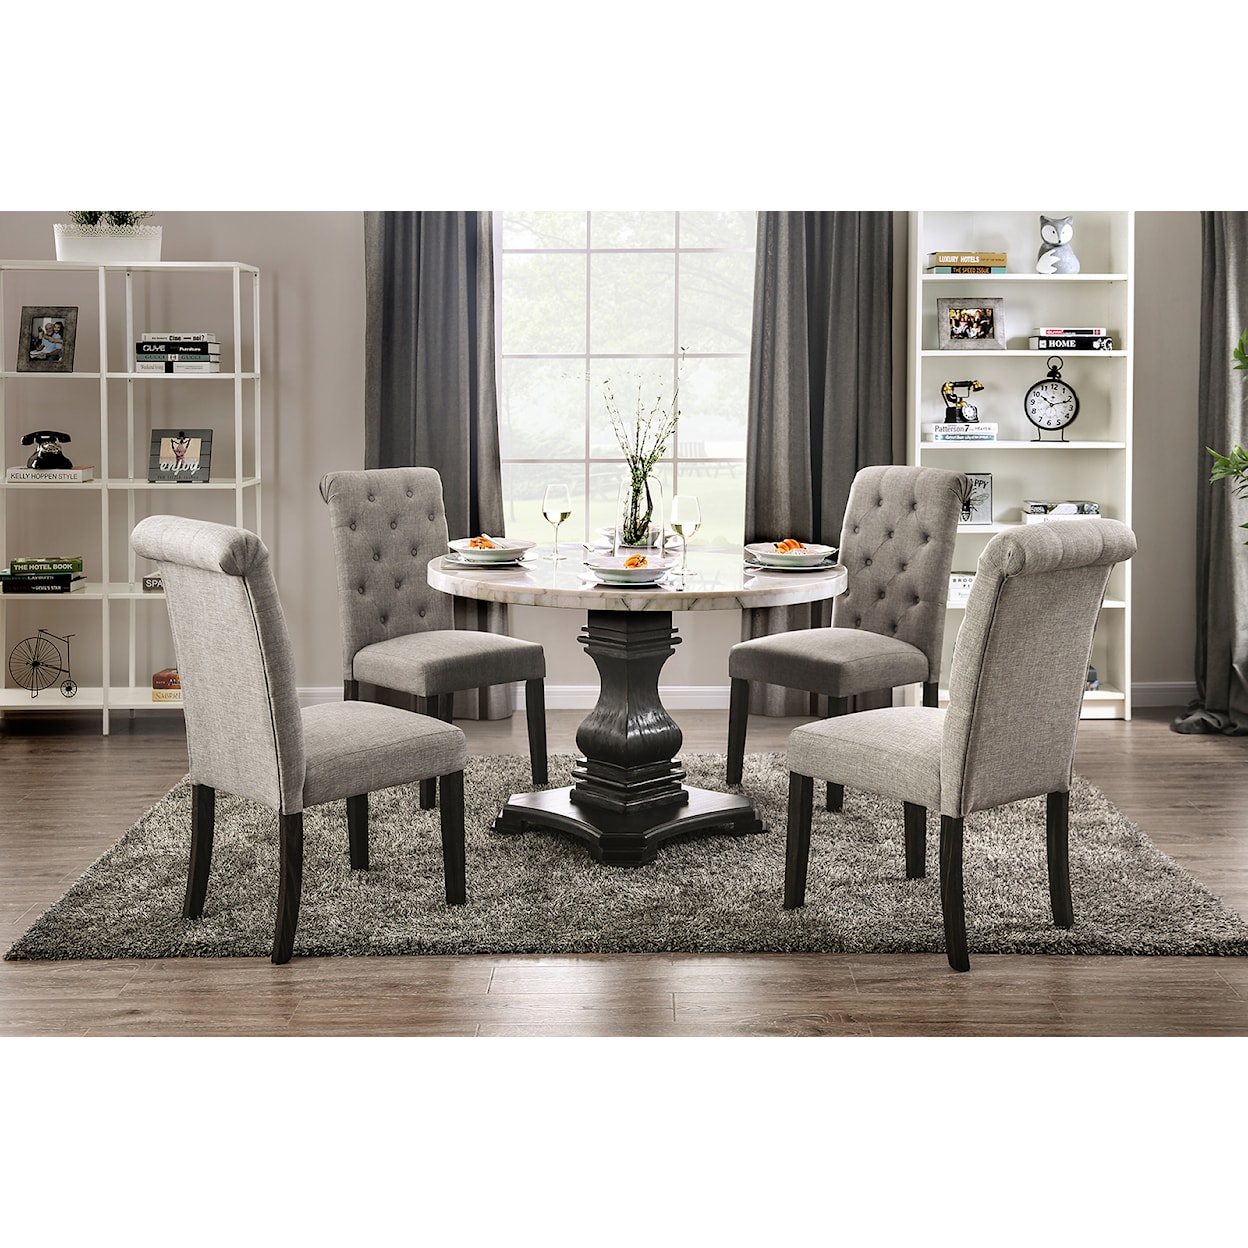 Furniture of America Elfredo 5 Pc. Round Dining Table Set